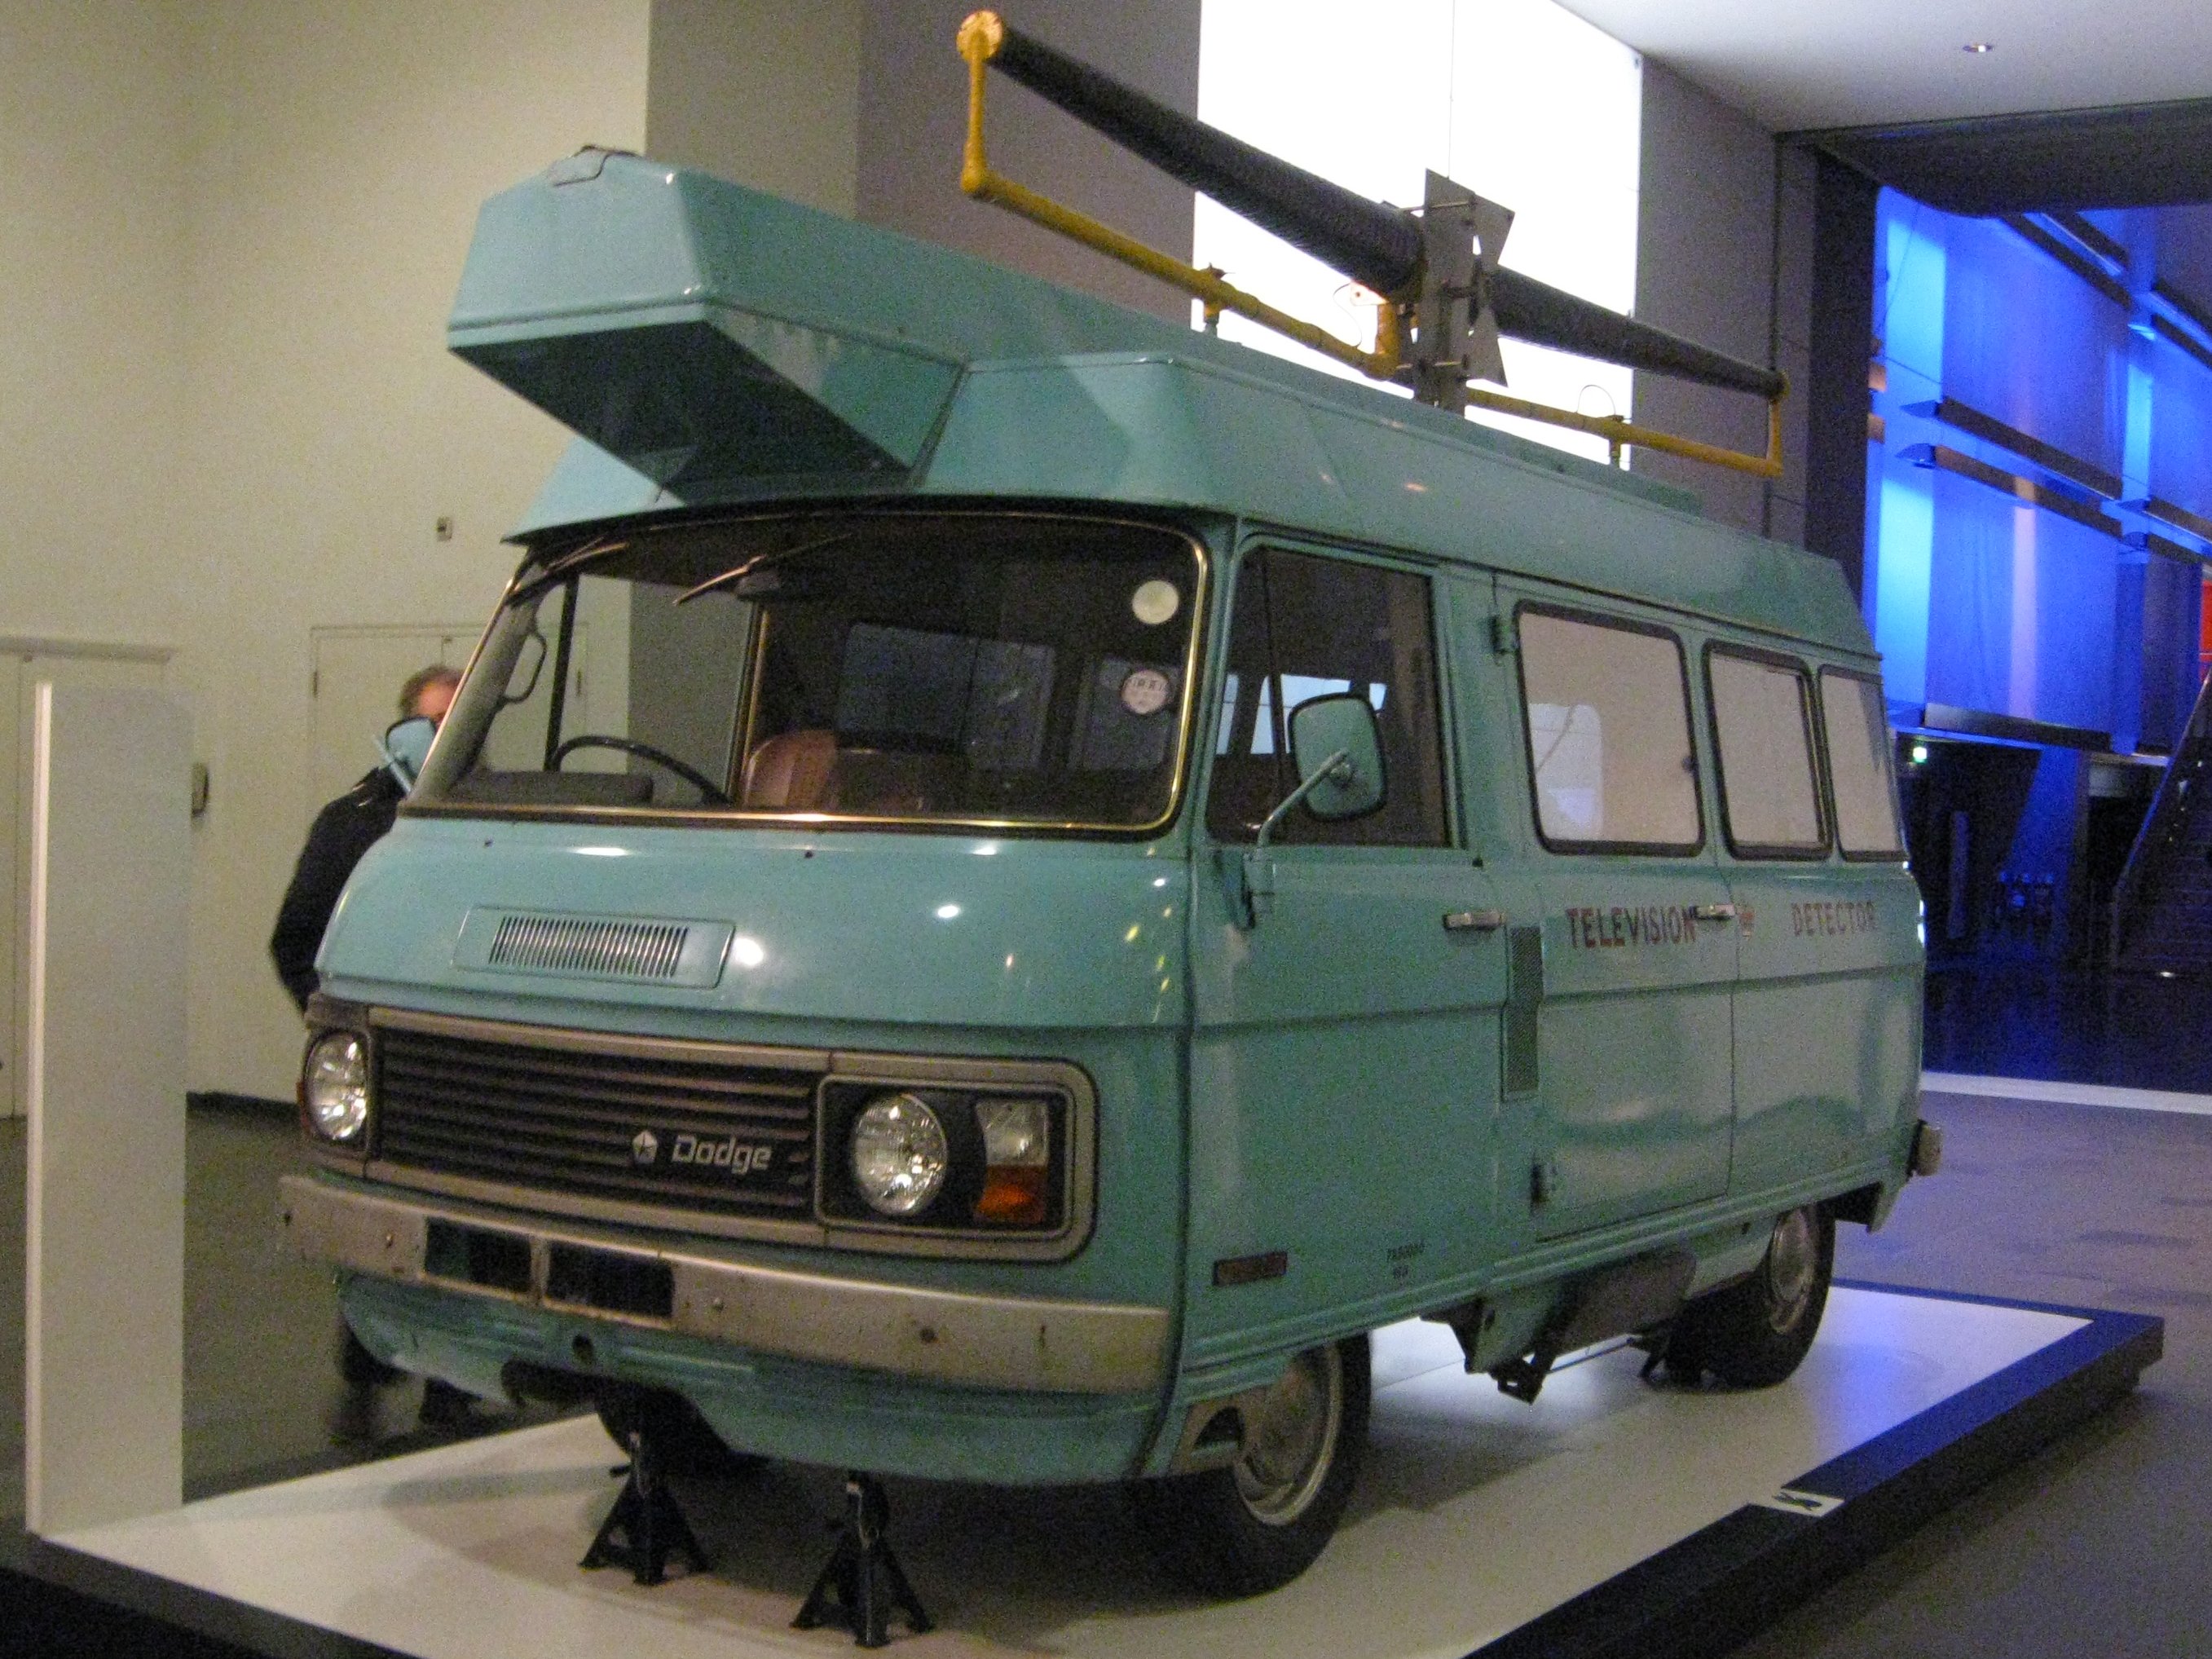 A TV detector van from the UK, CC BY SA Eagleish.